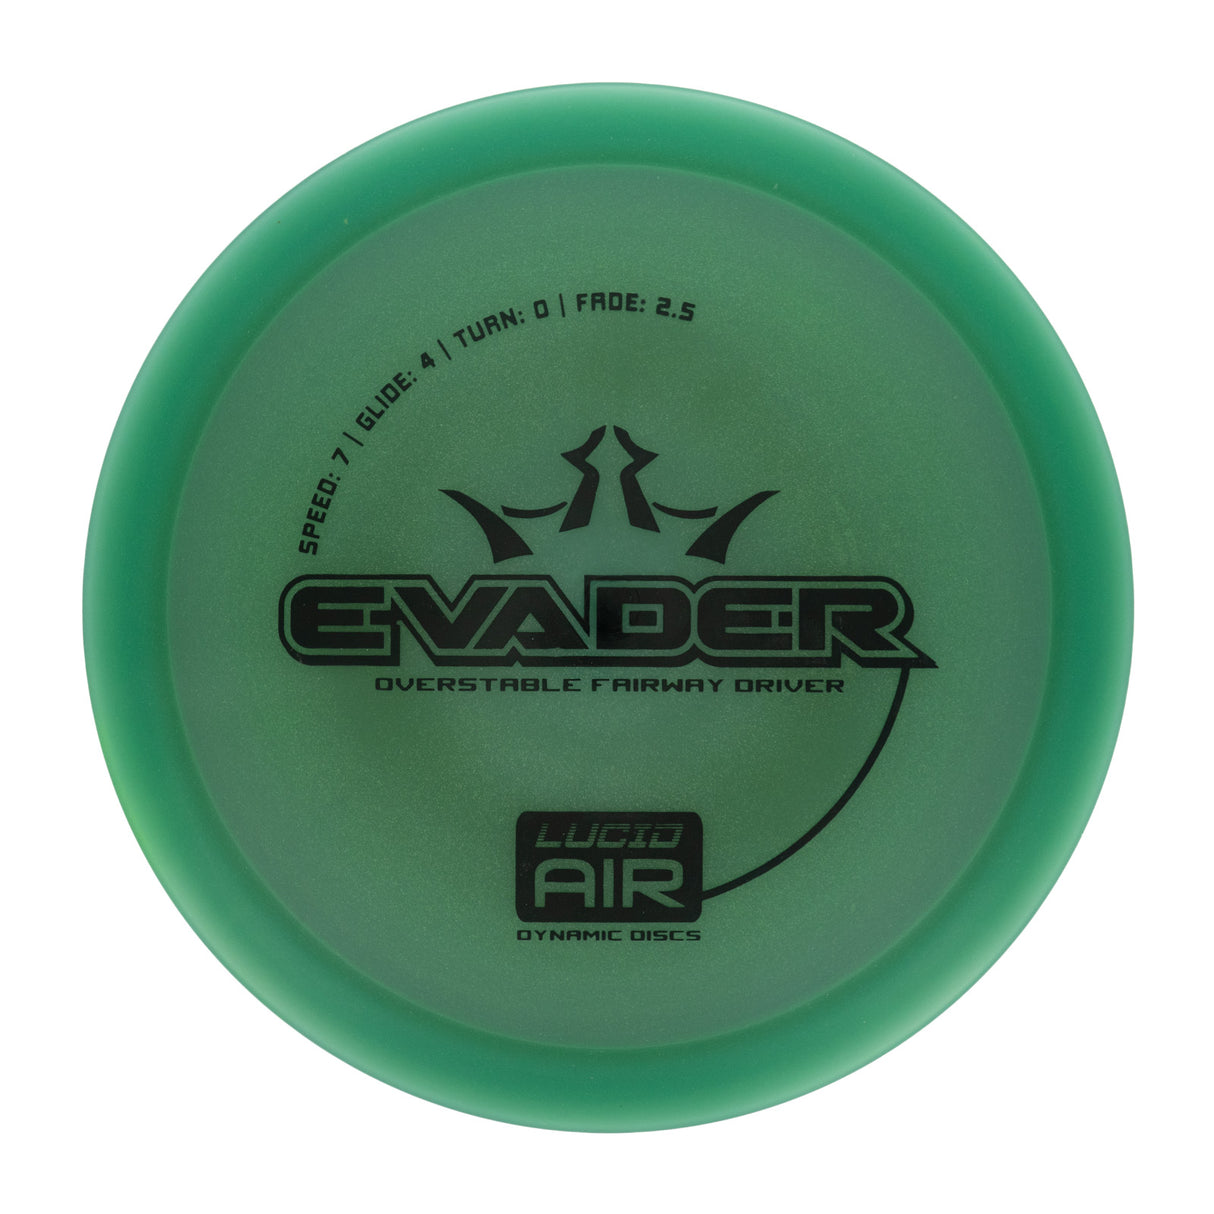 Dynamic Discs Evader - Lucid Air 160g | Style 0002